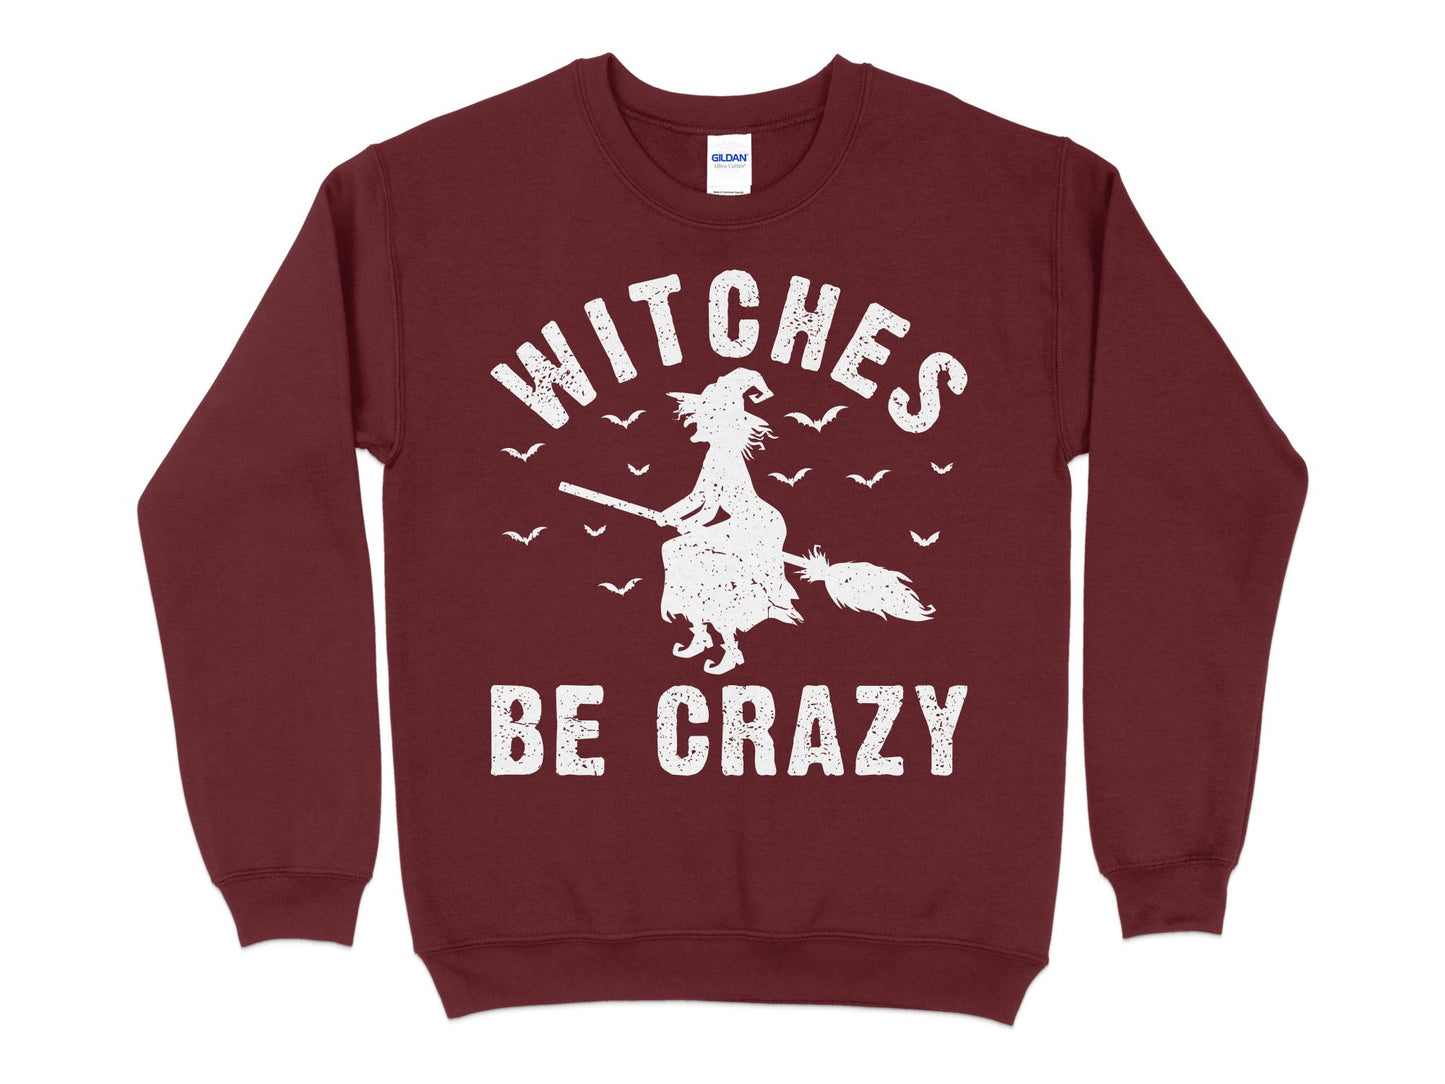 Witches Be Crazy Sweatshirt, maroon